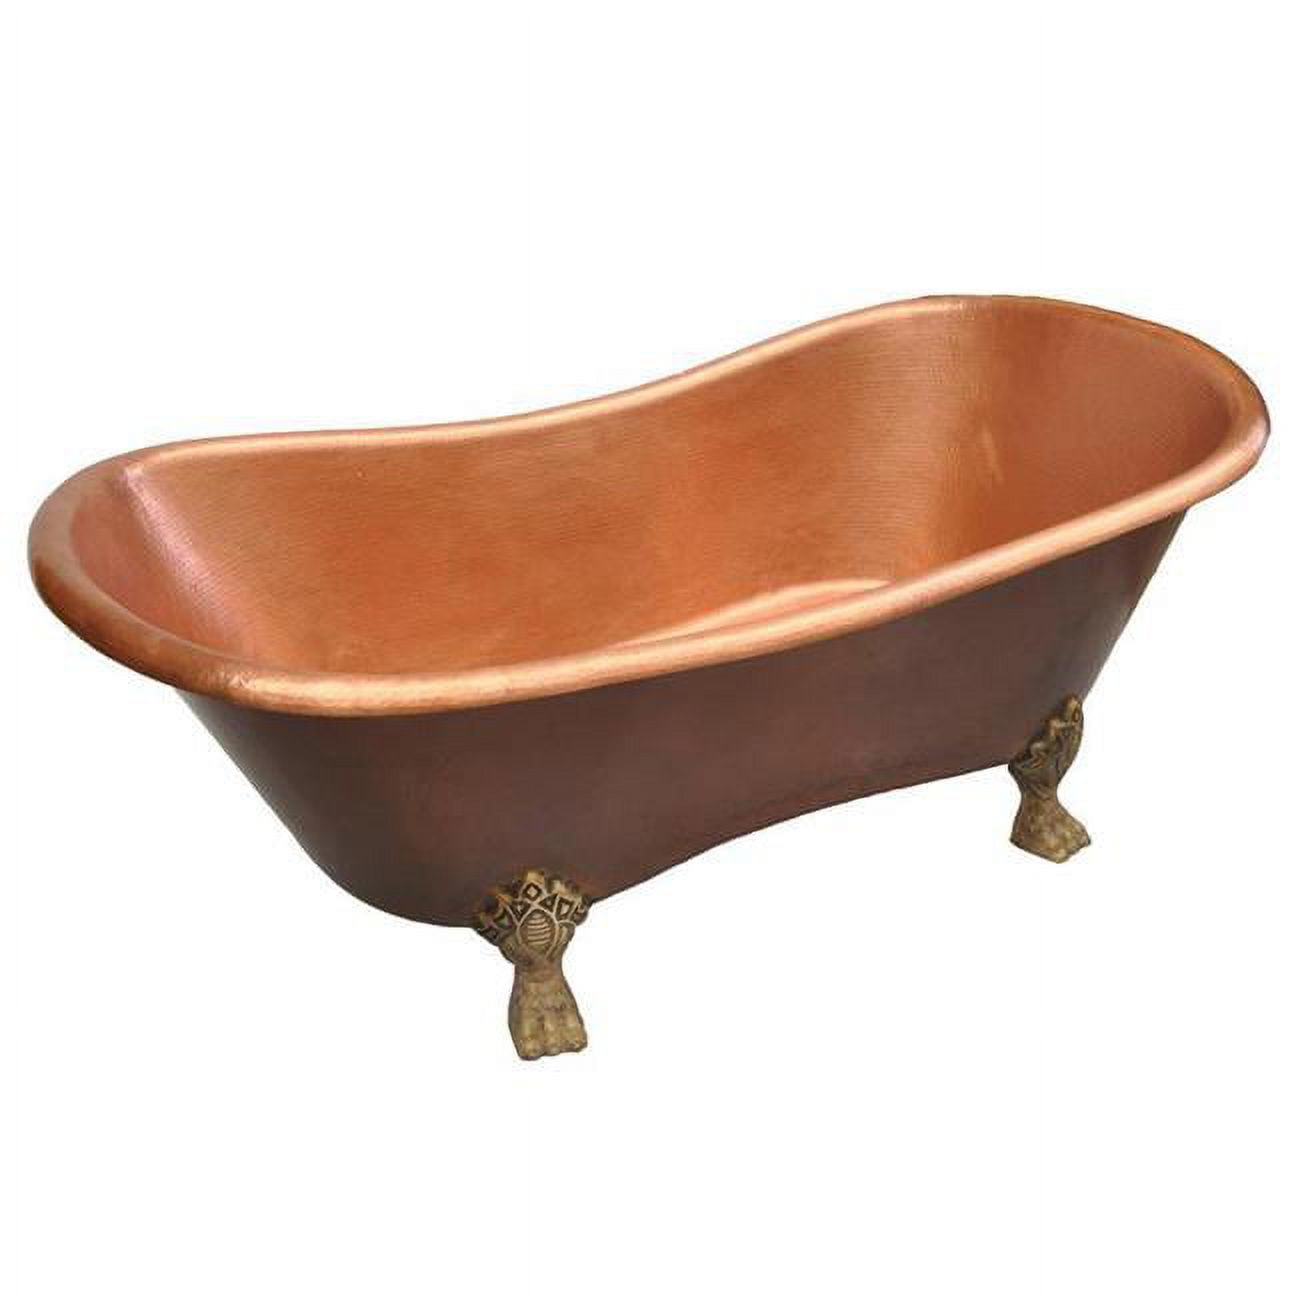 Cbt-at-66-dl Copper Bath Tub Antique Design, Dark Light - Medium - 32 X 32 X 66 In.